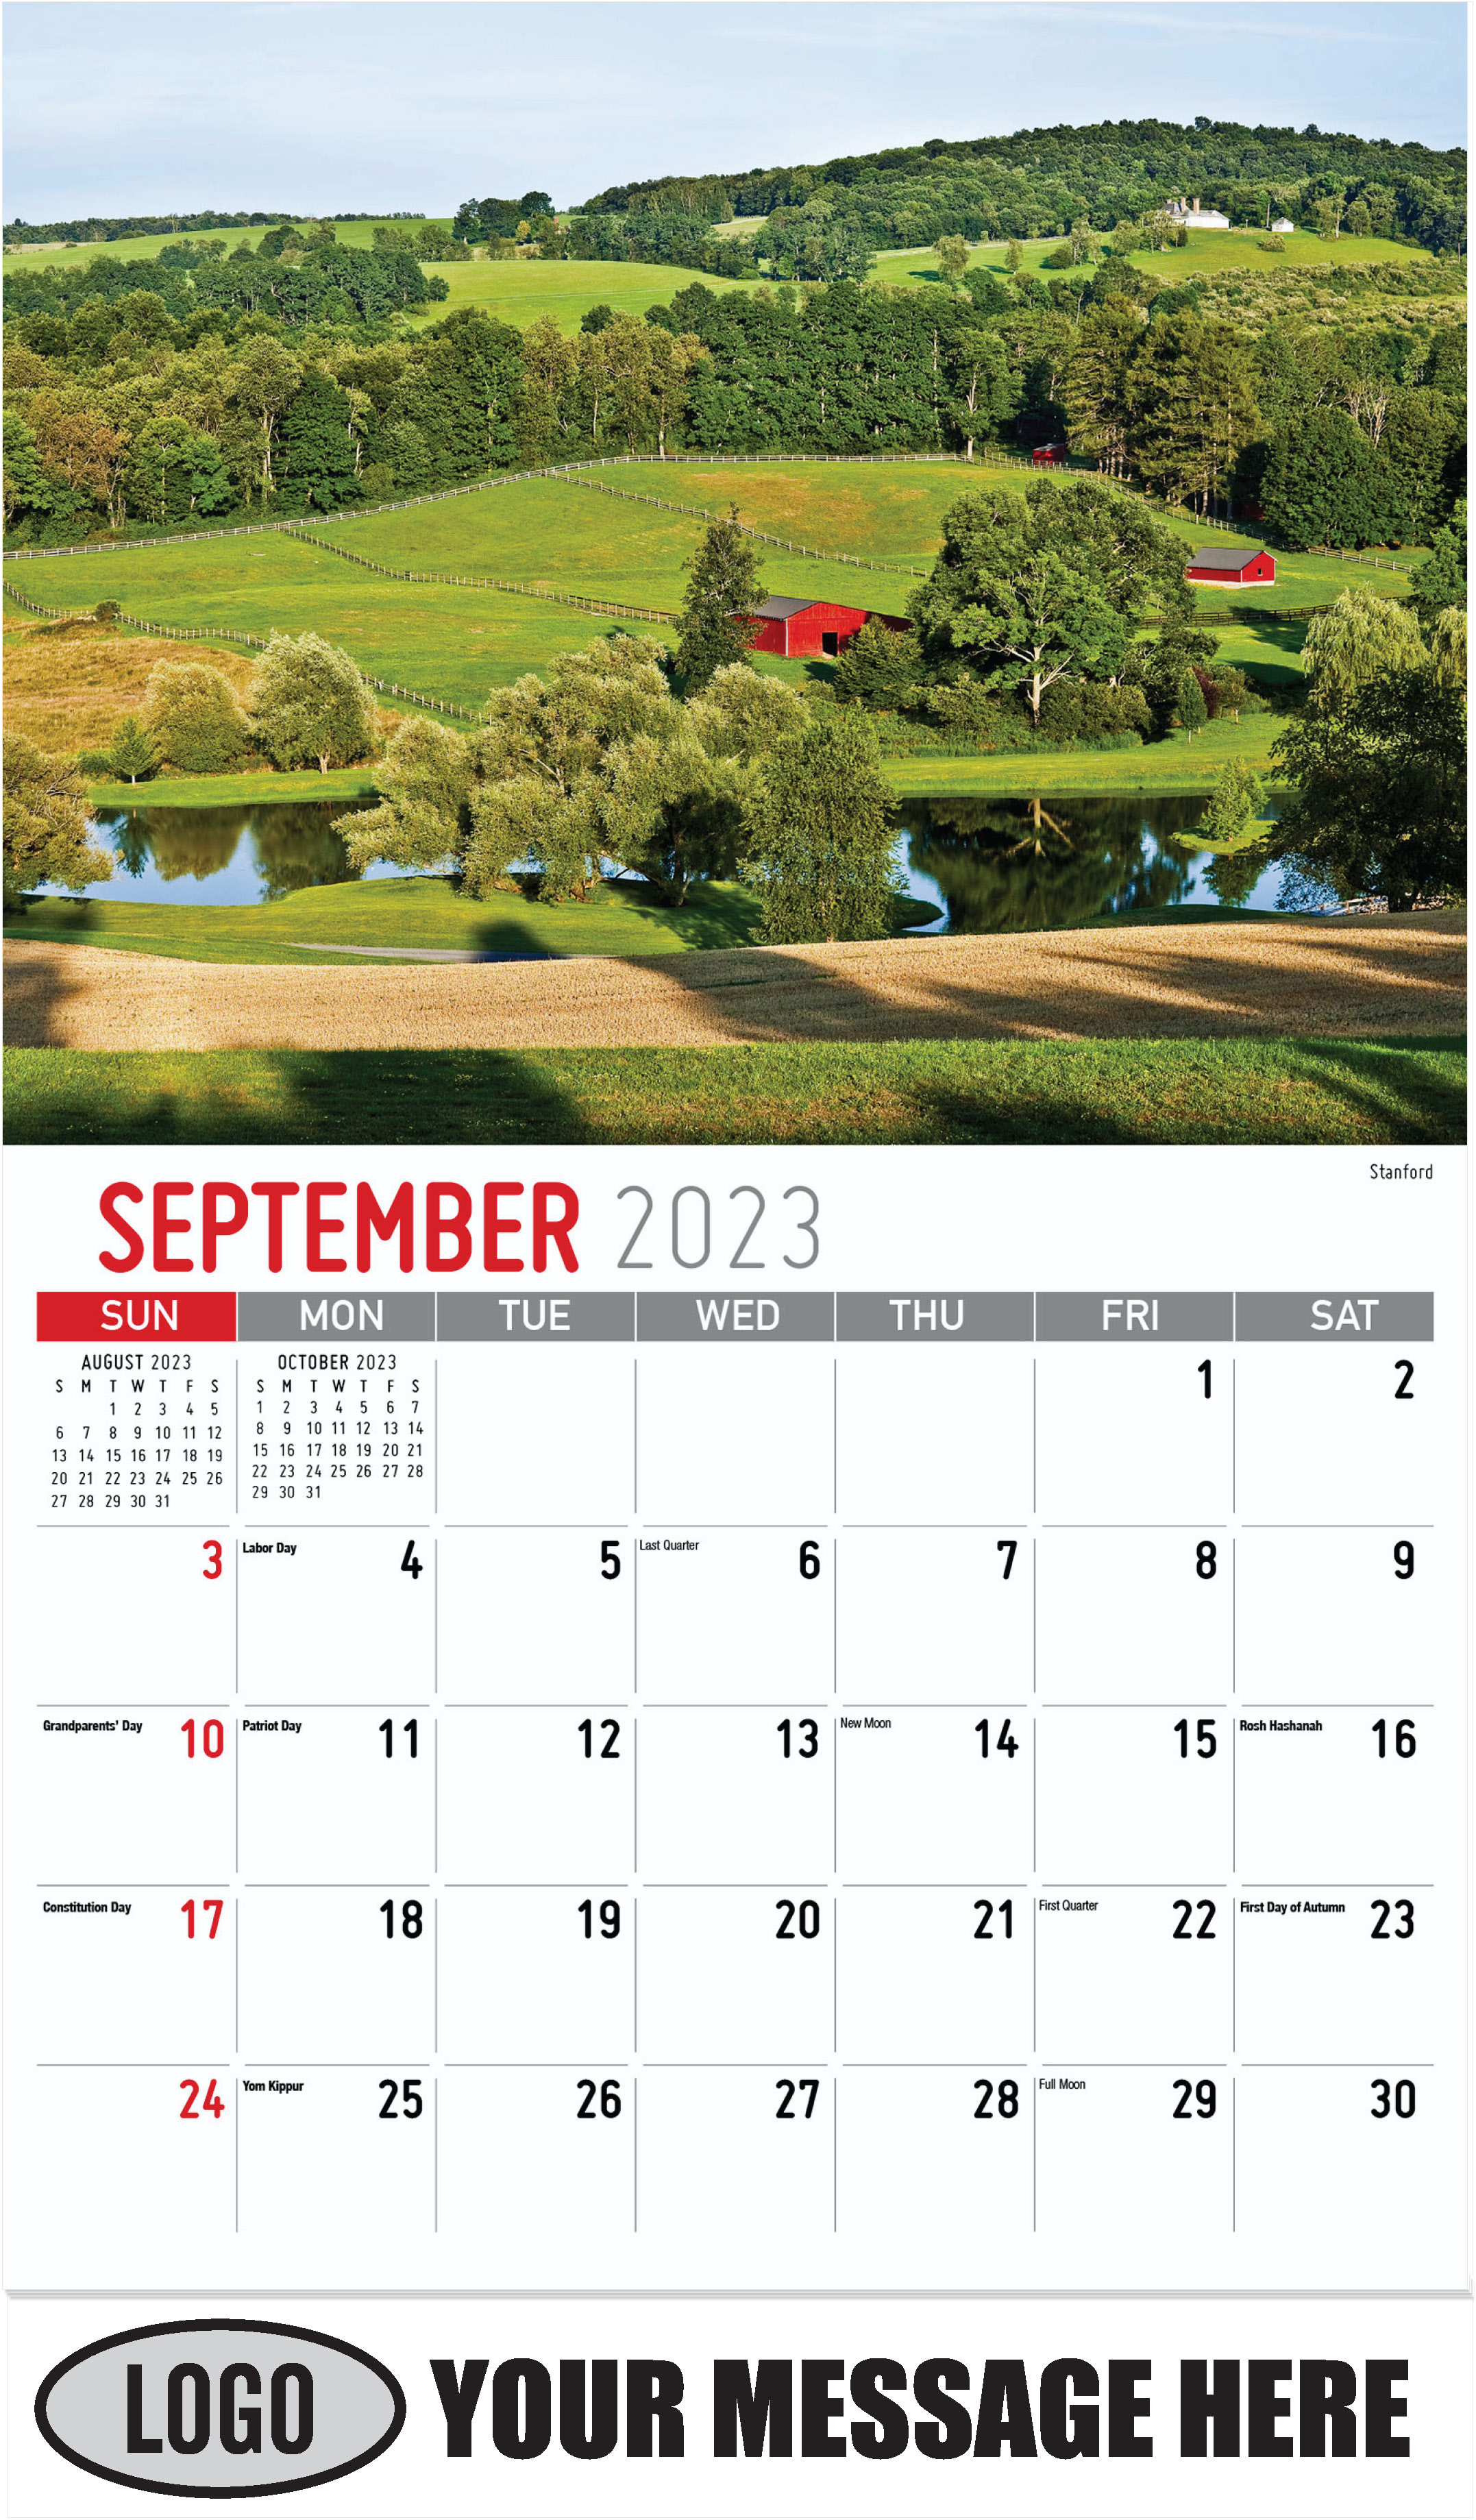 Stanford - September - Scenes of New York 2023 Promotional Calendar